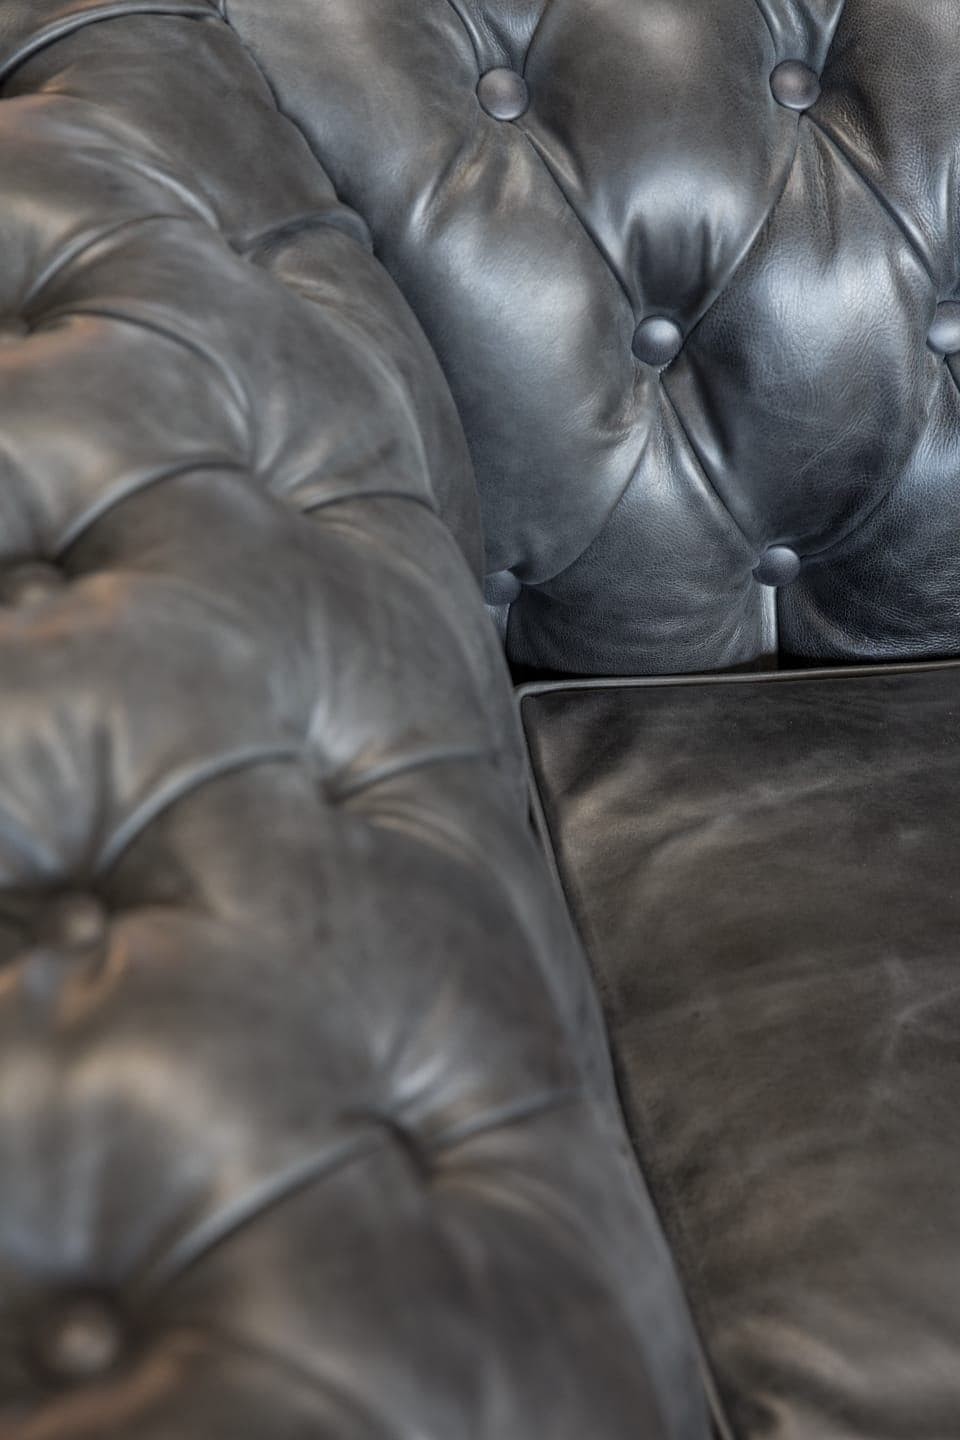 herhaling Afdeling Oppervlakte Chesterfield fauteuil zwart vintage look - OTIQ